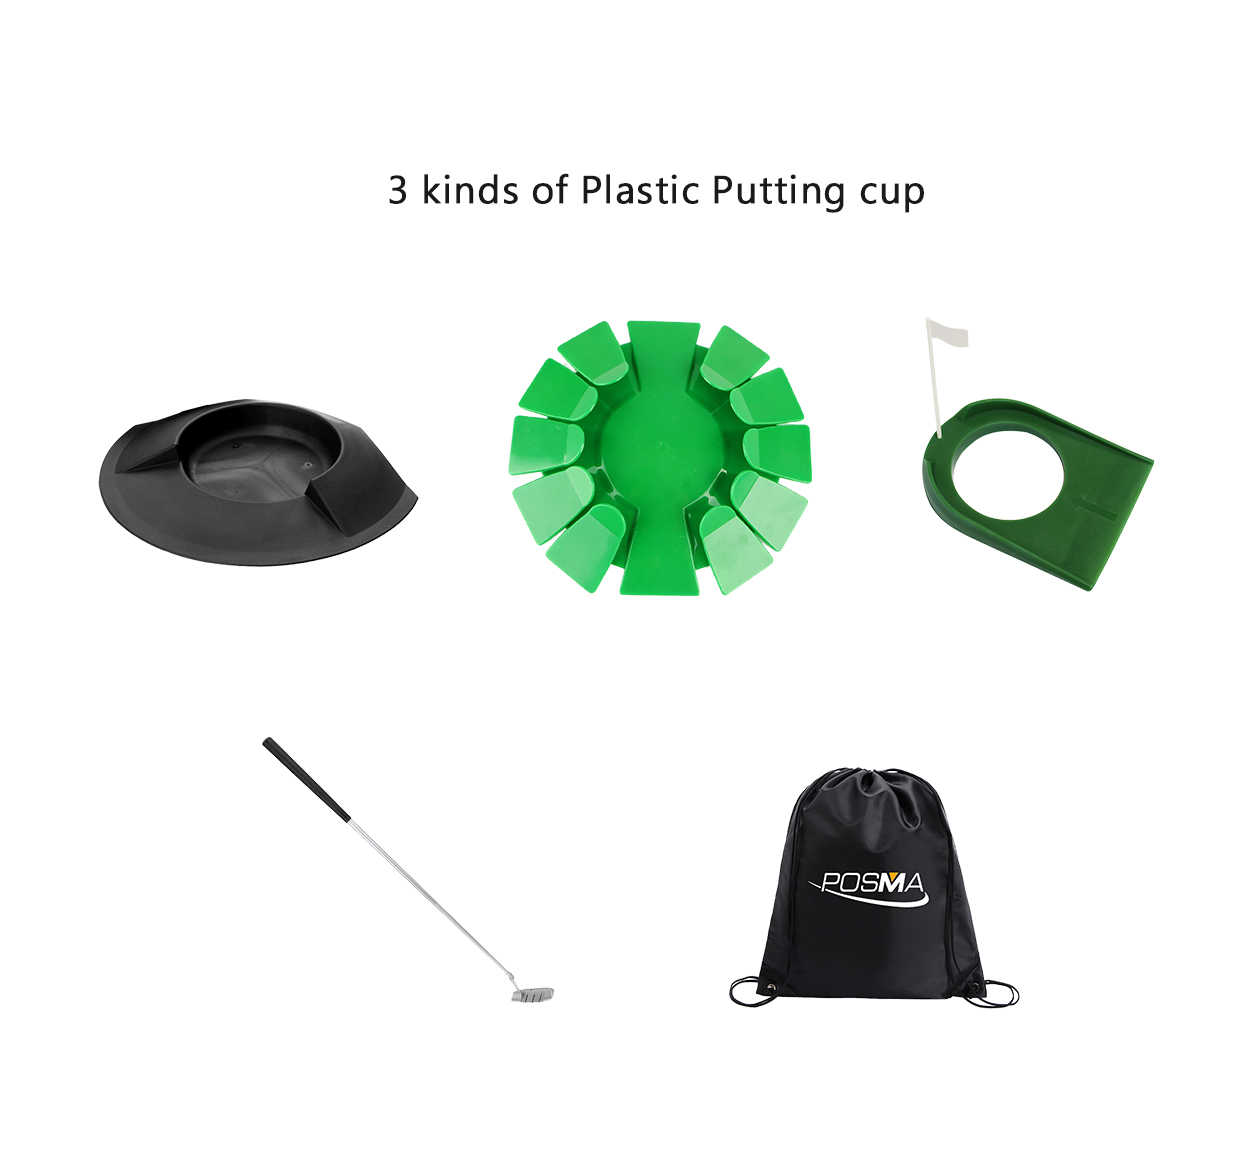 Posma PHS005高爾夫練習推桿套組含3款塑料球洞1支可拆卸4節鋁推桿 1個POSMA黑色輕便背包